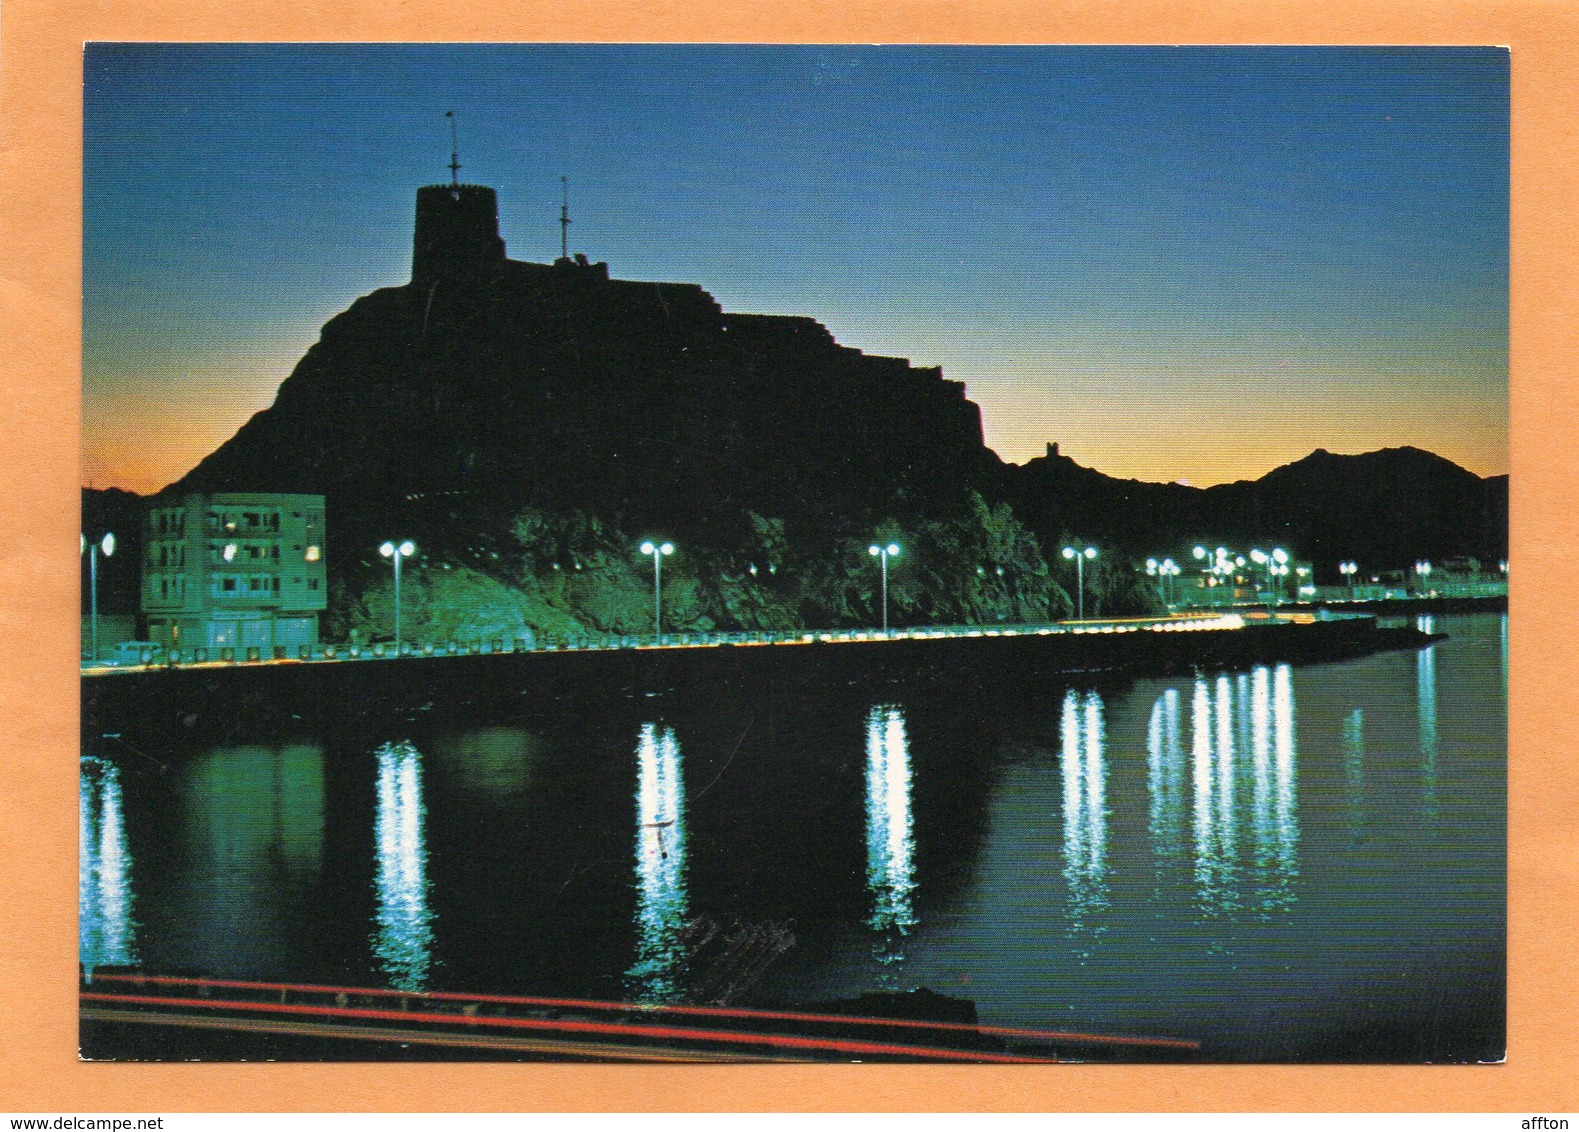 Oman Old Postcard - Oman